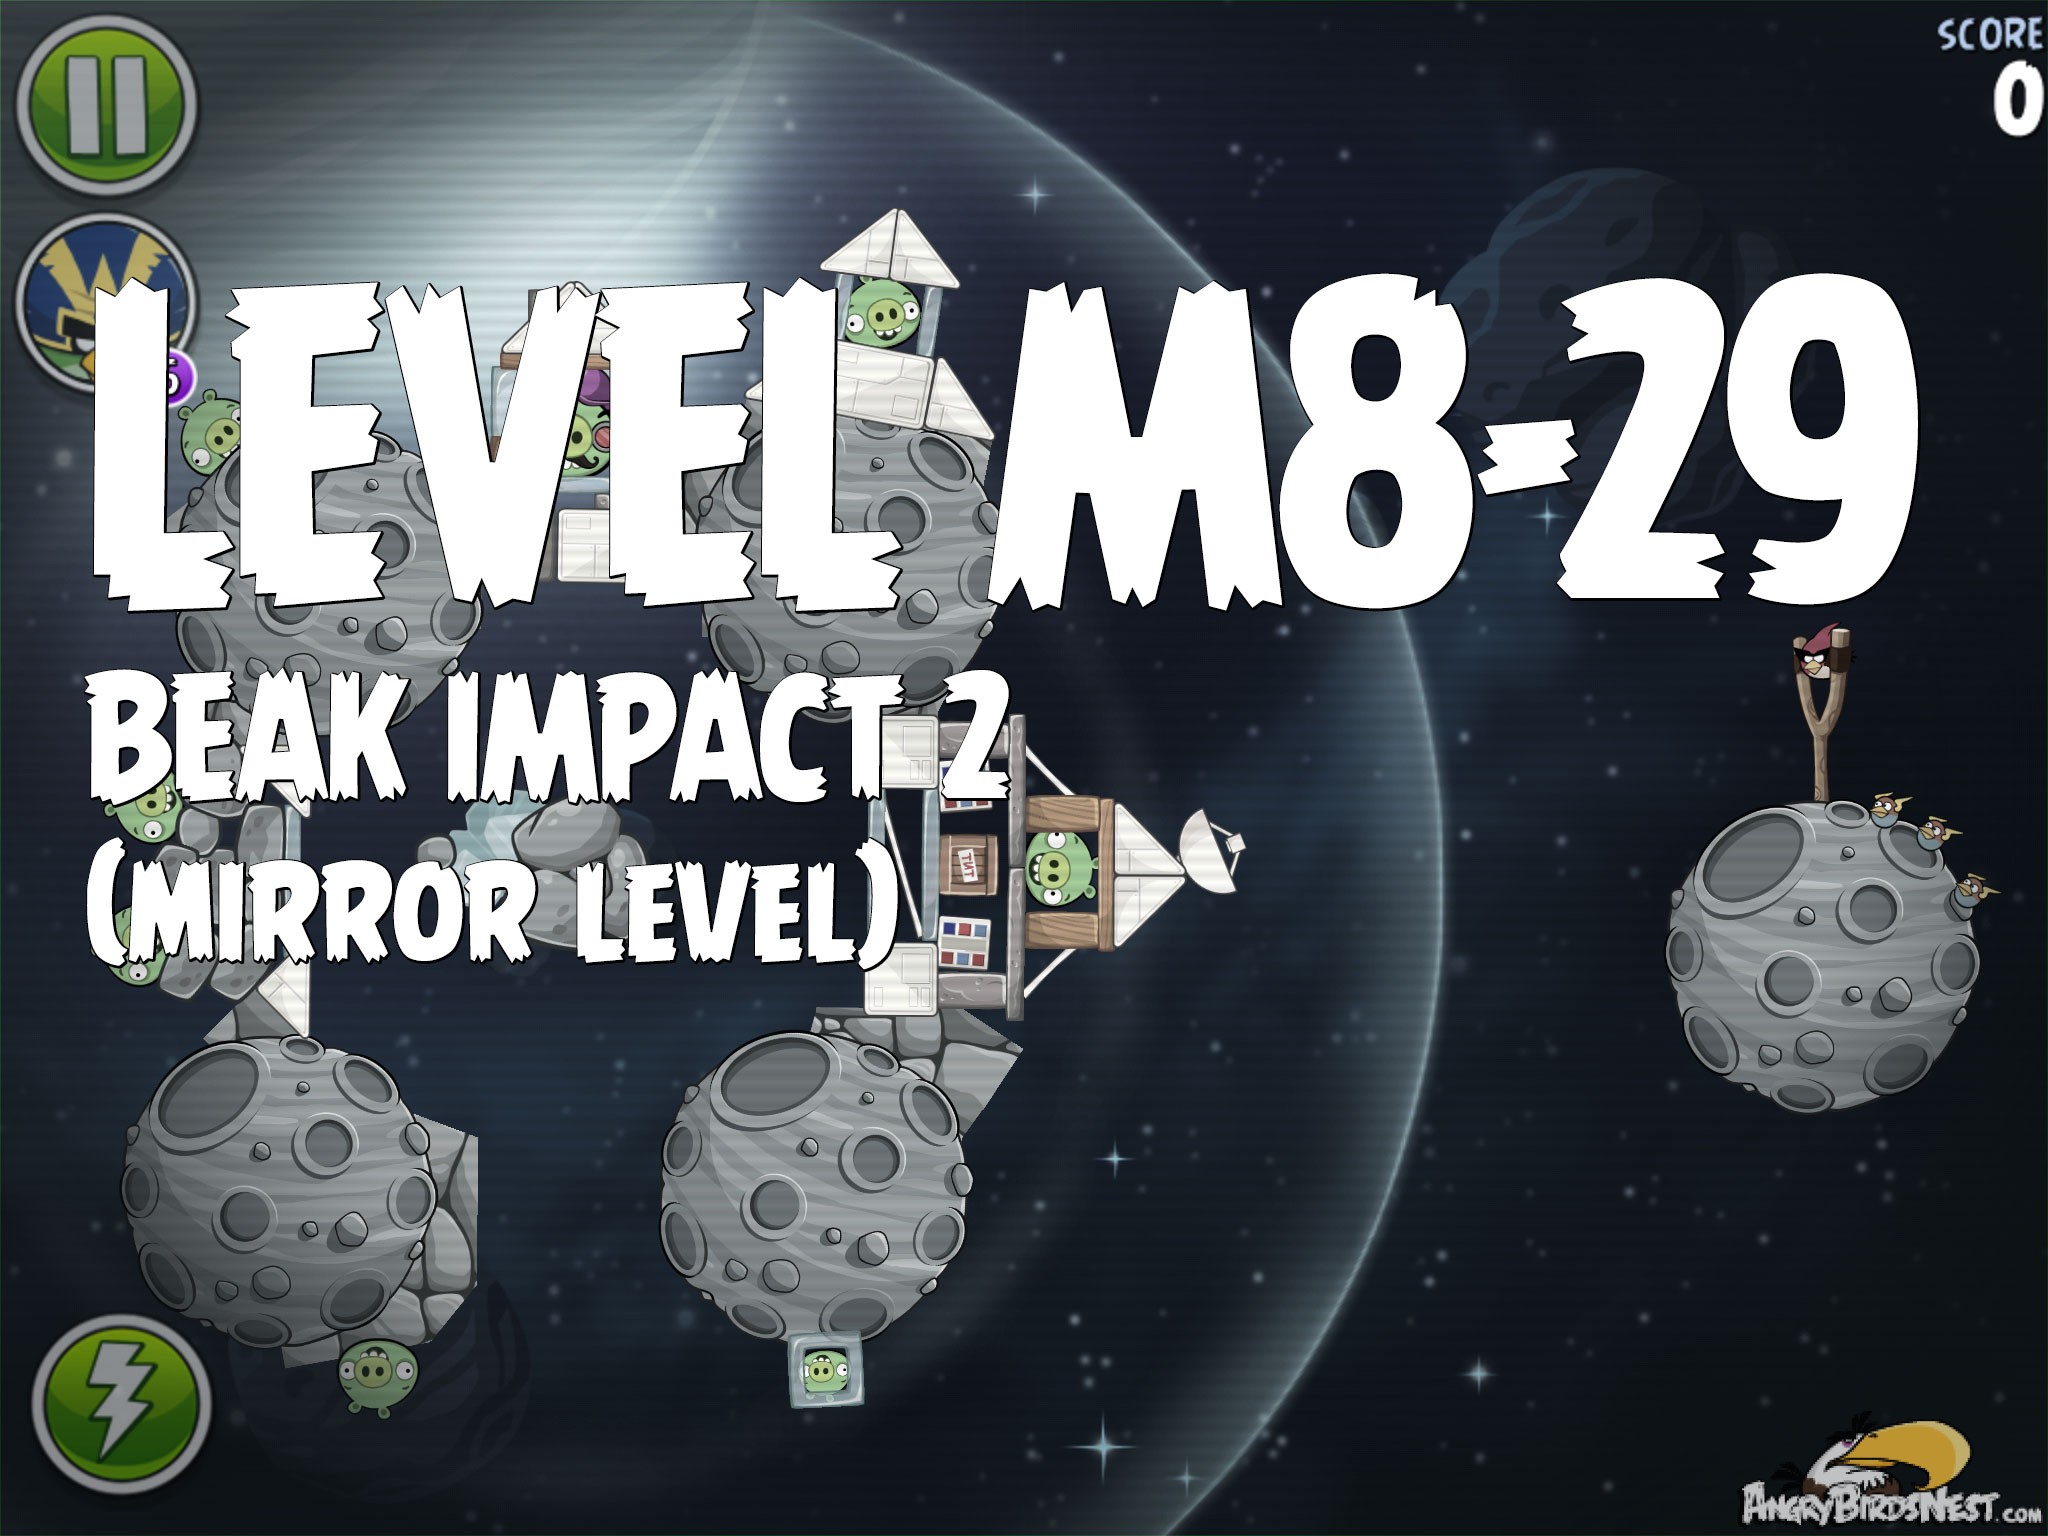 Angry Birds Space Beak Impact 2 Level M8-29